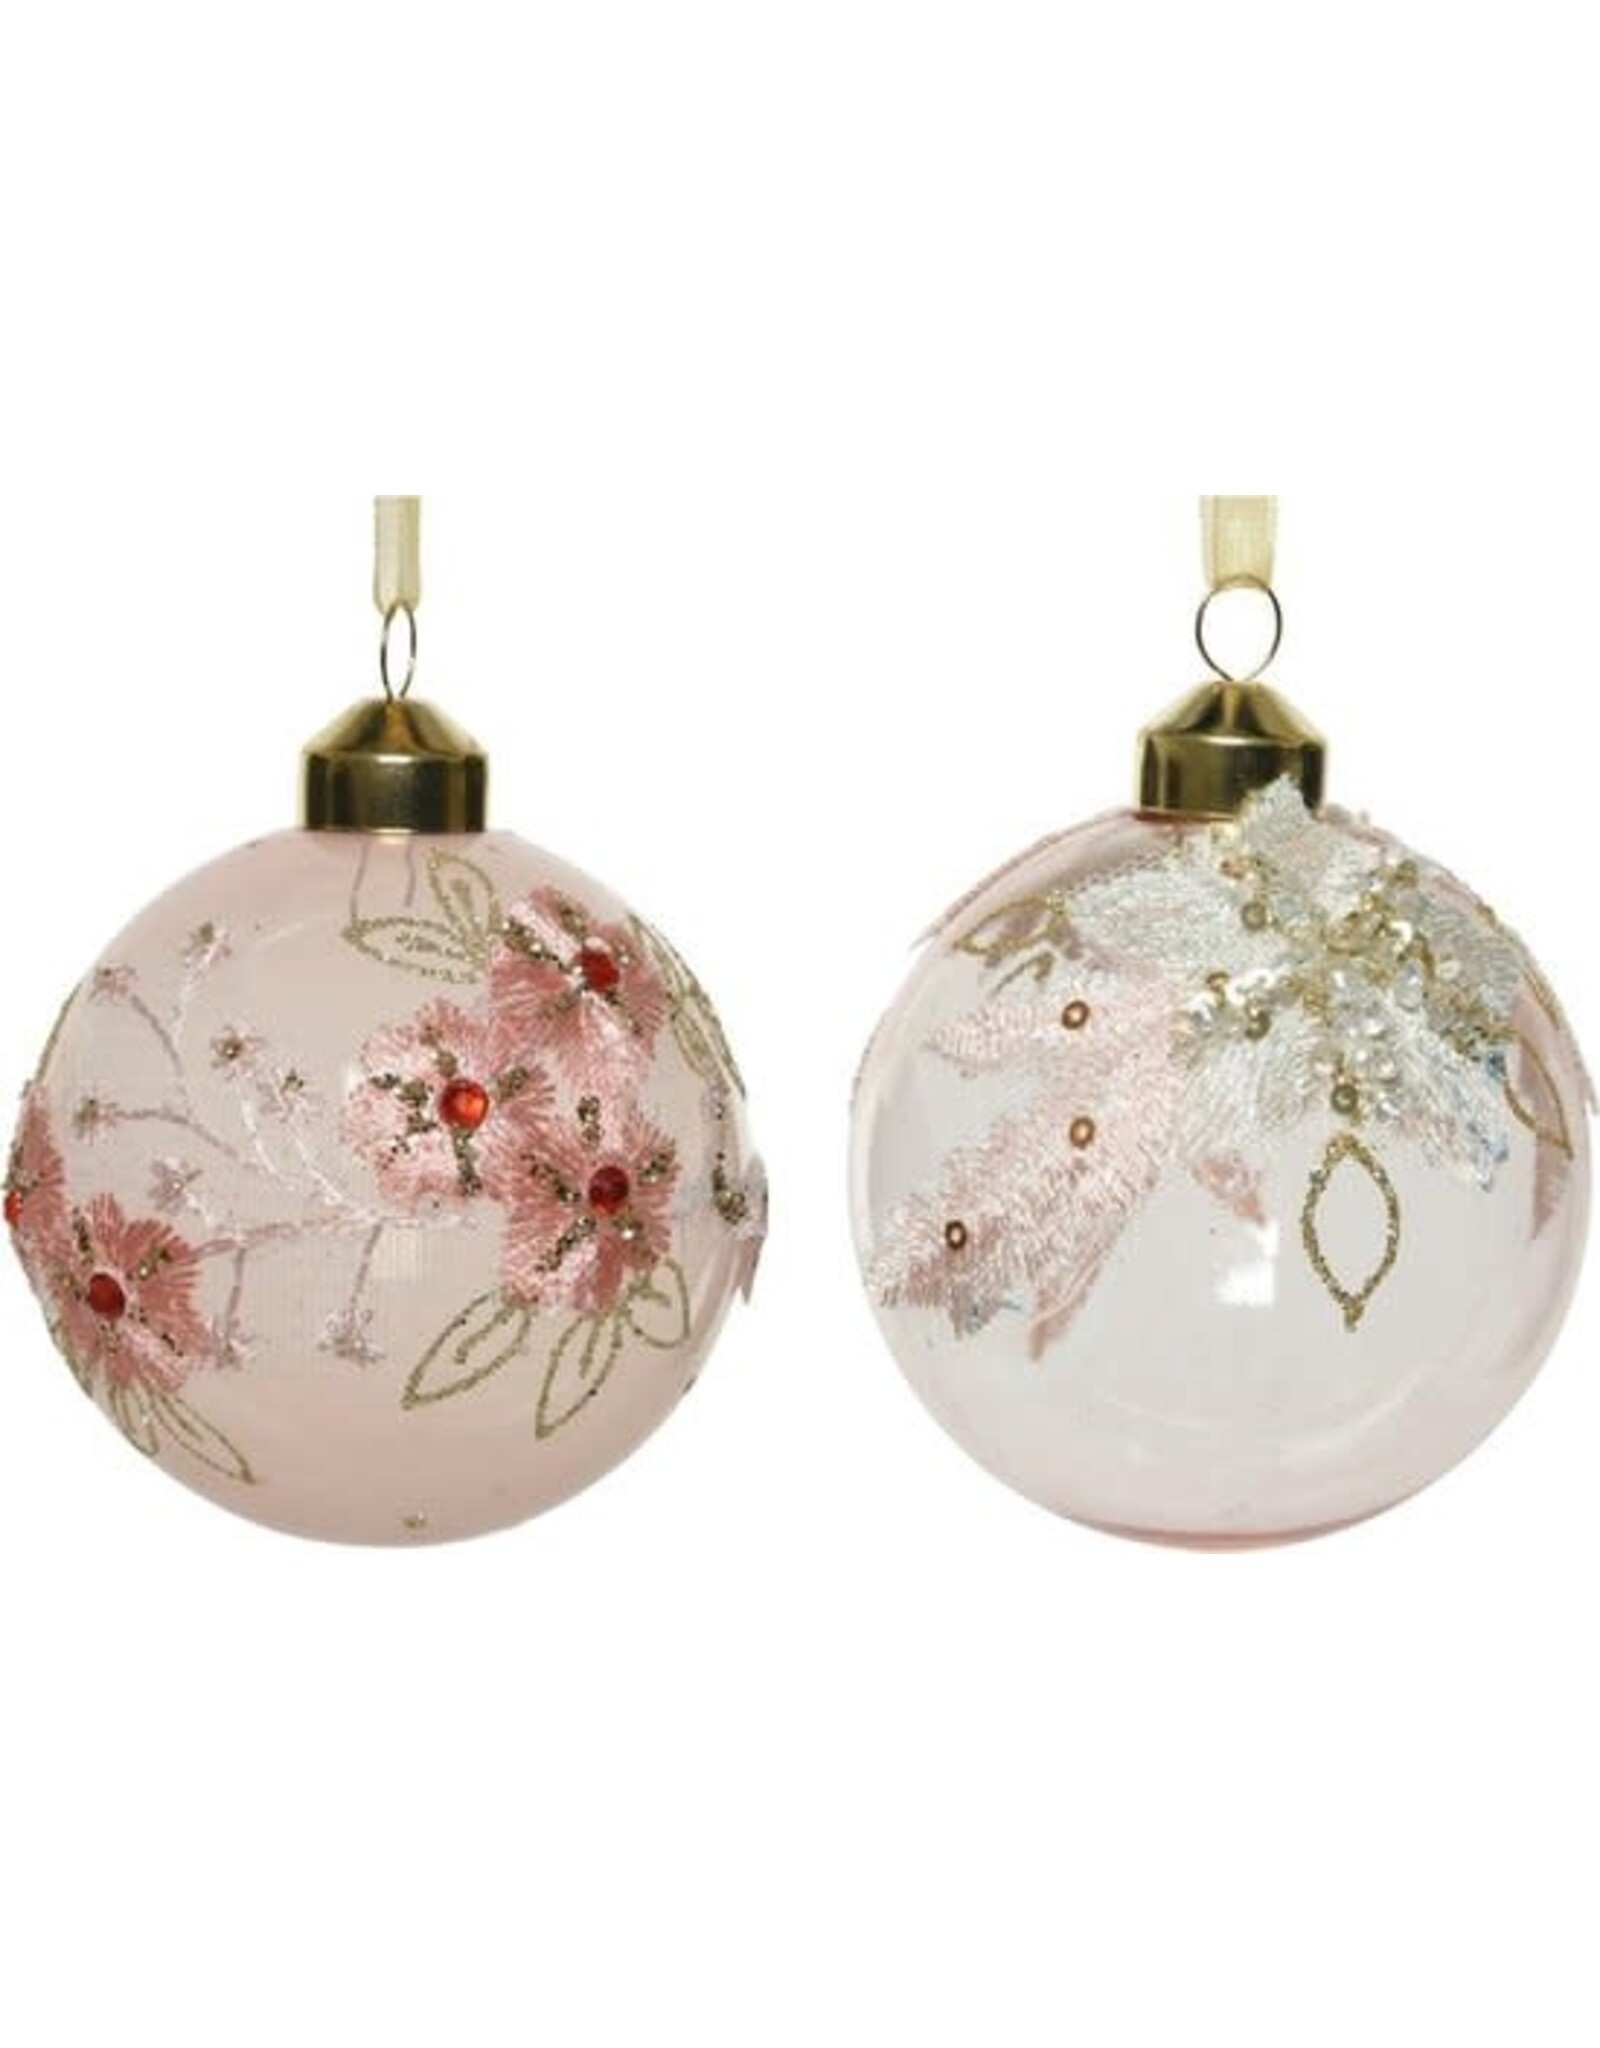 Decoris Decoris Kerstballenset a 3 stuks roze 8 cm